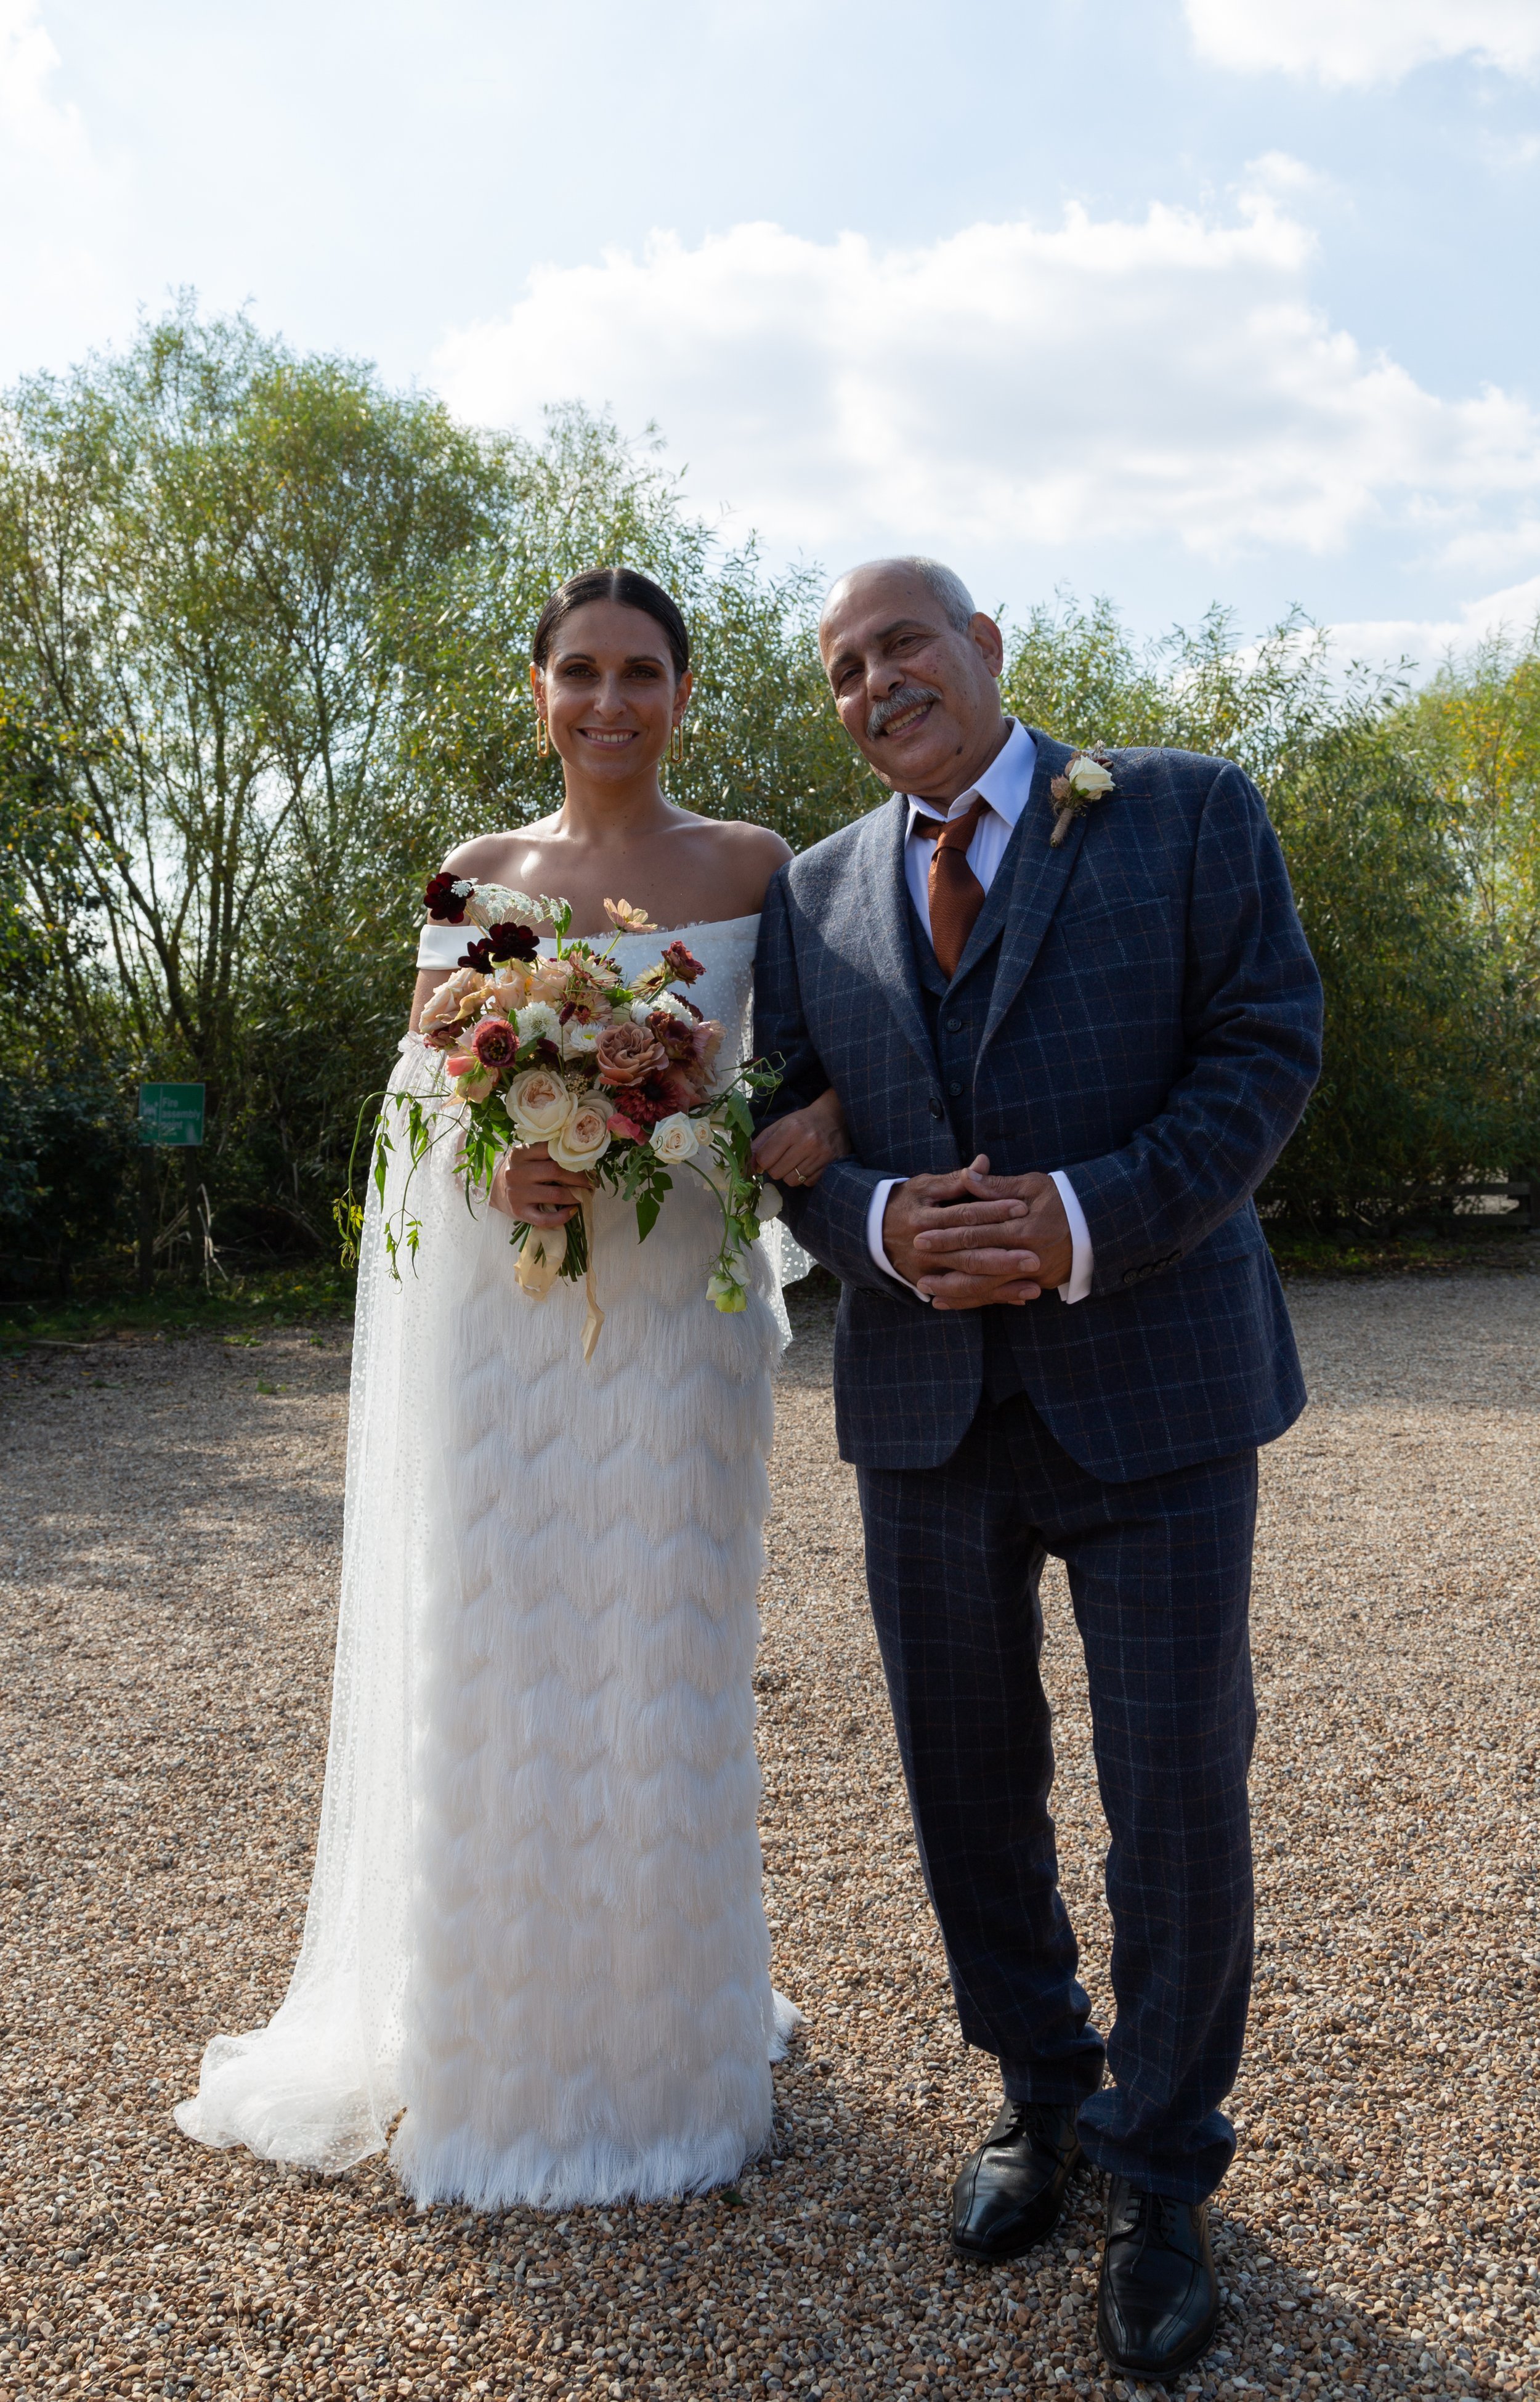 Beautiful bride Jodie wore a wedding dress by Halfpenny London